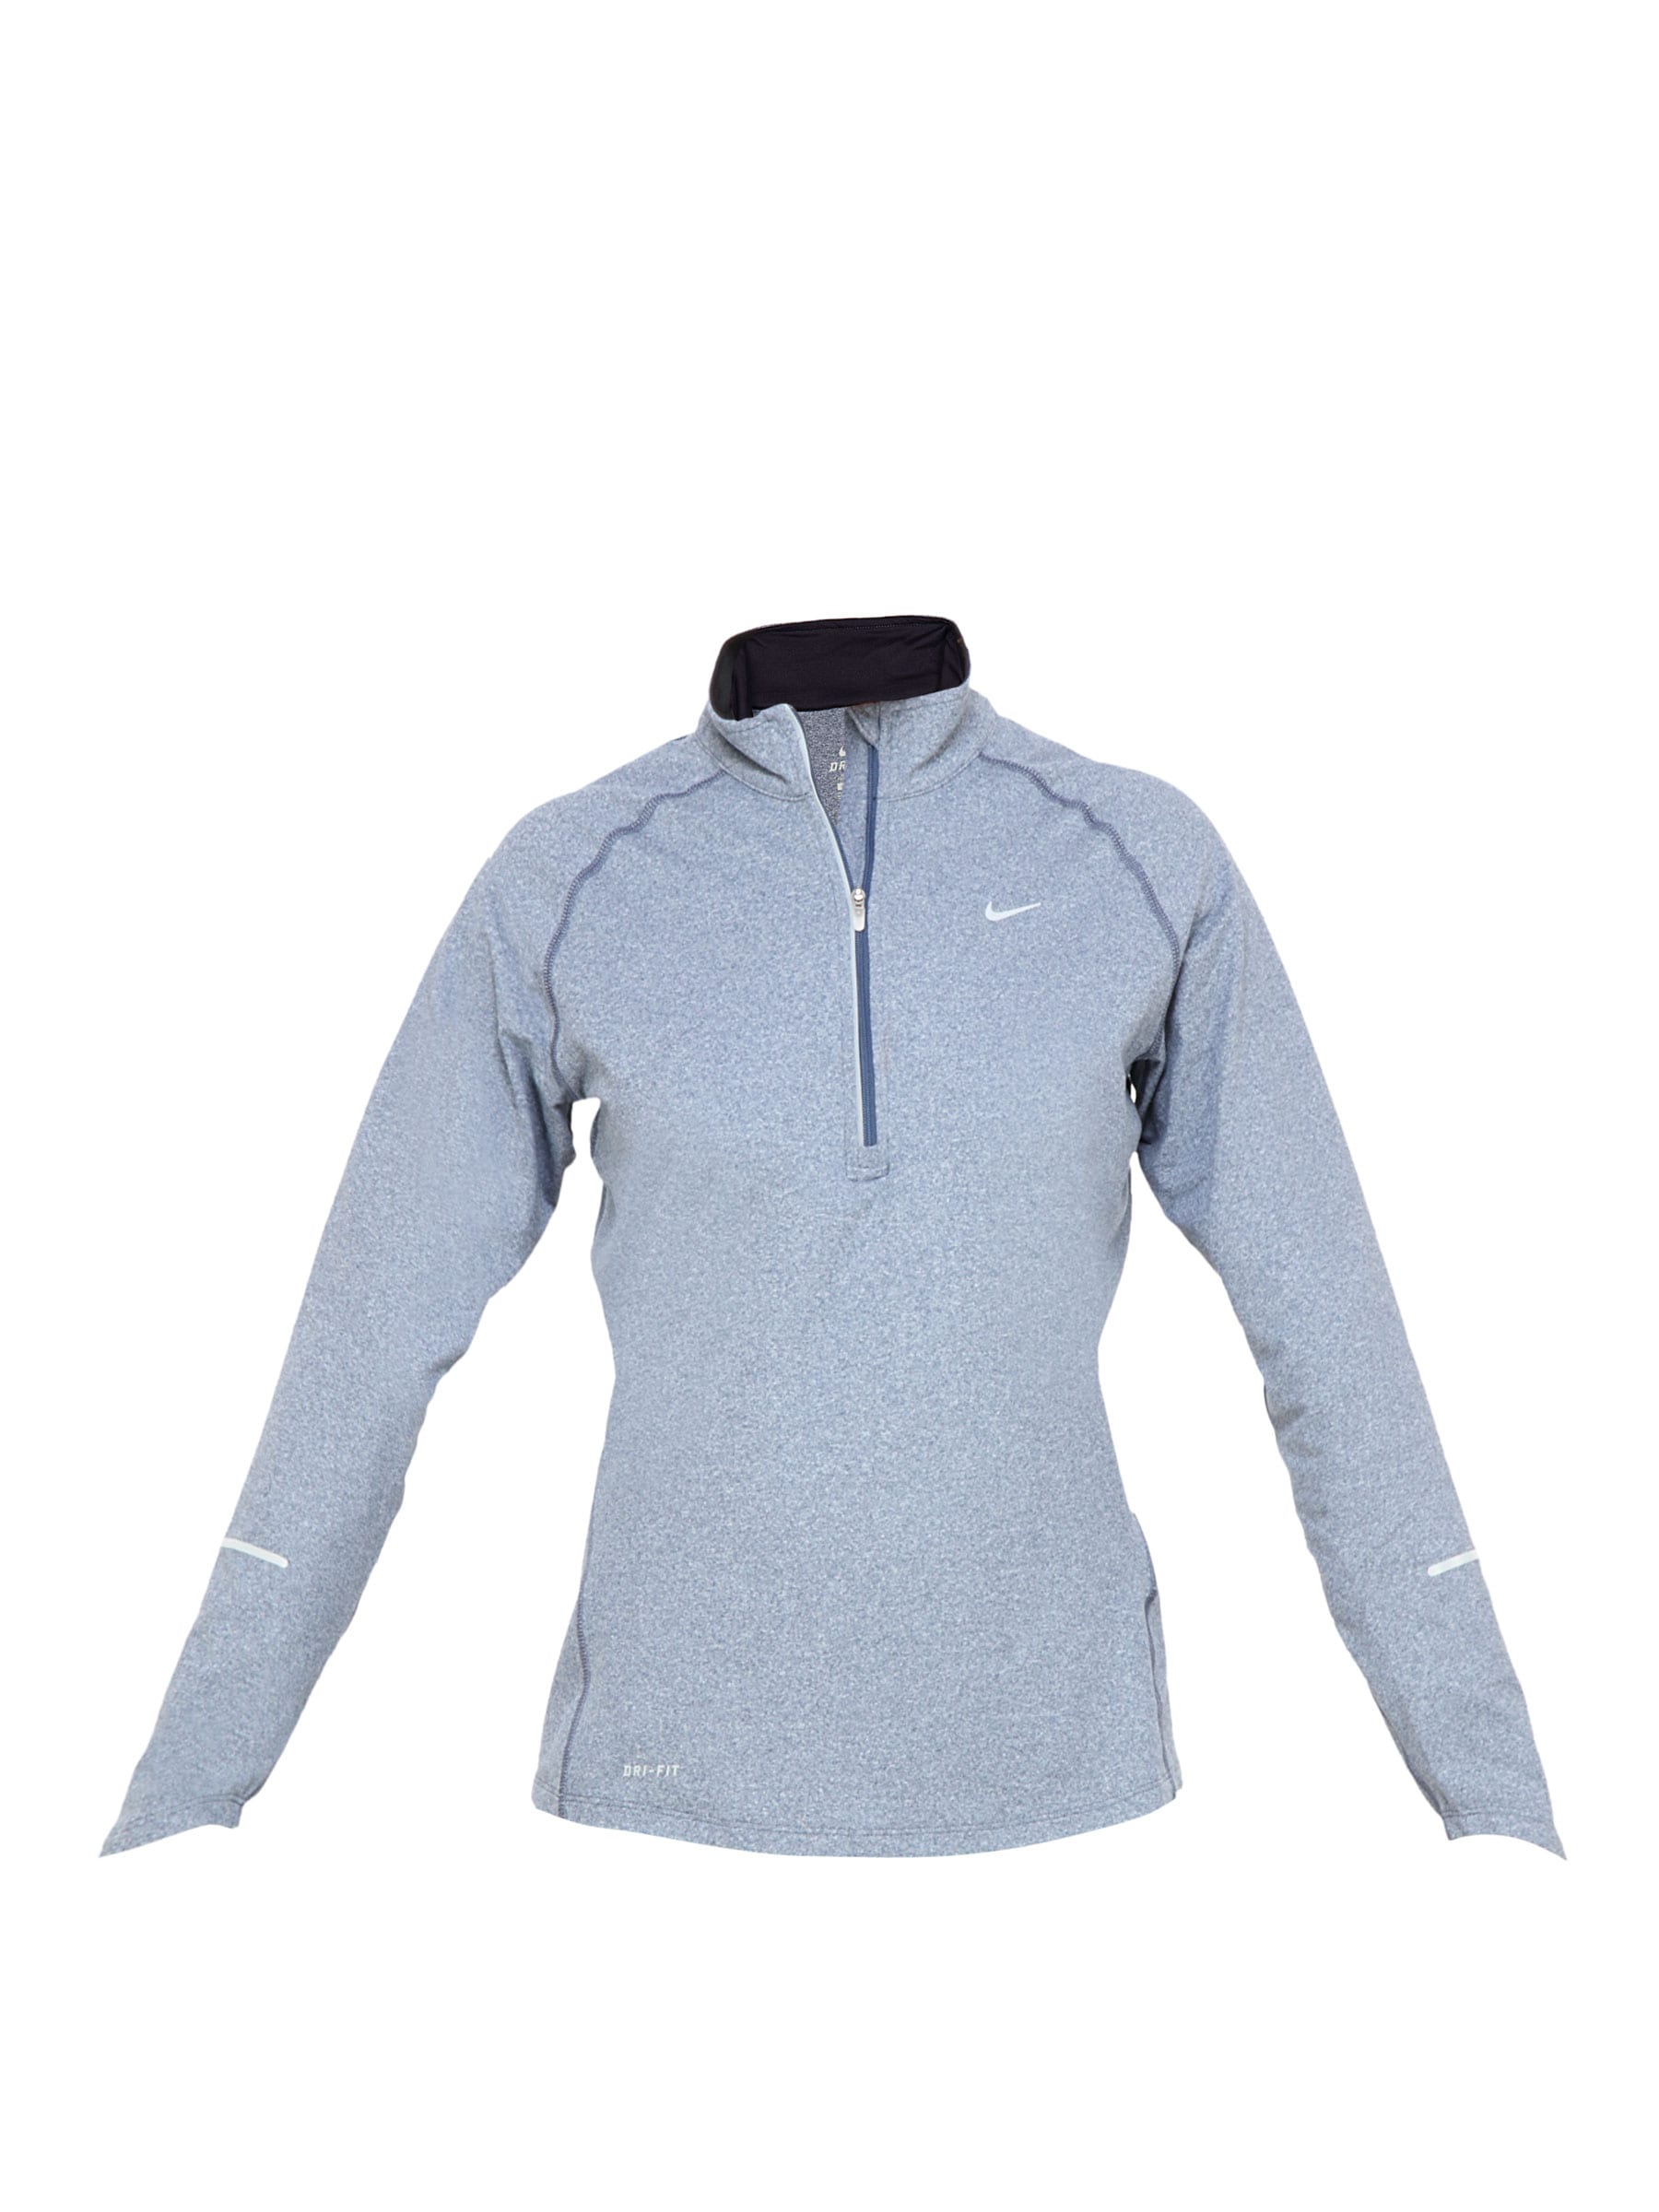 Nike Women Grey Sweatshirt